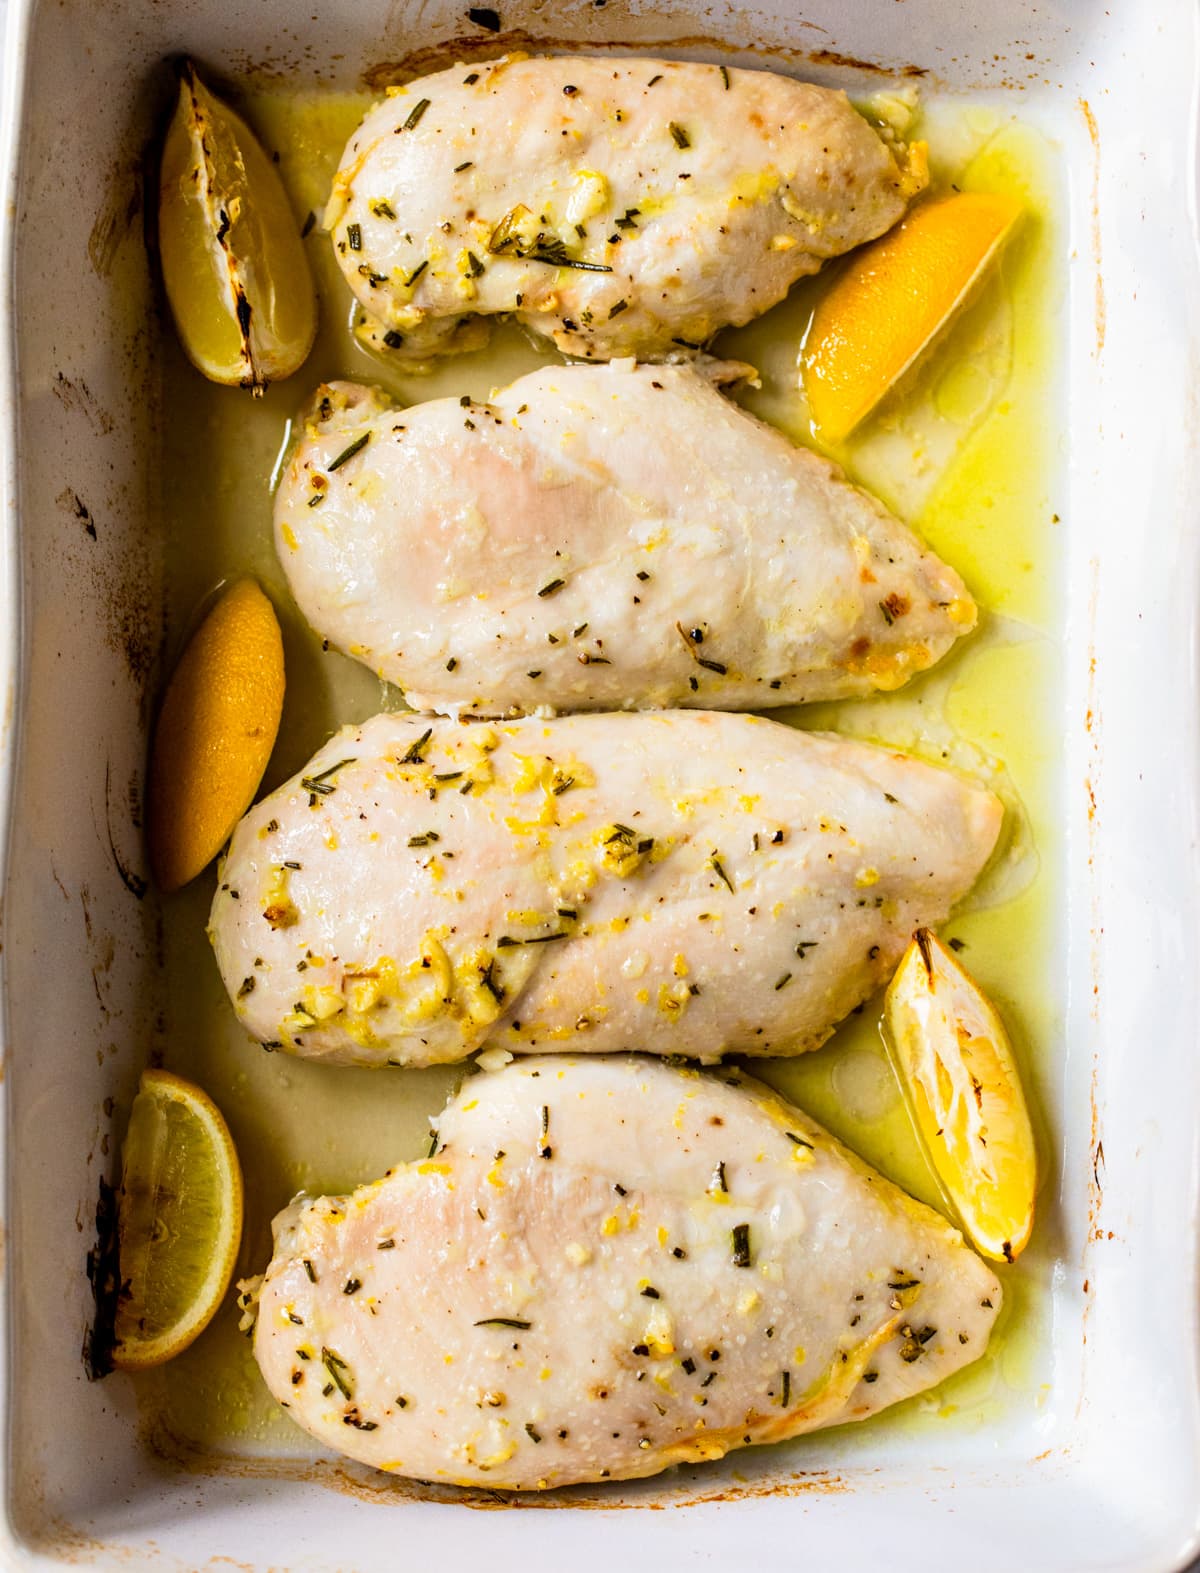 Overhead view of baked lemon chicken in pan